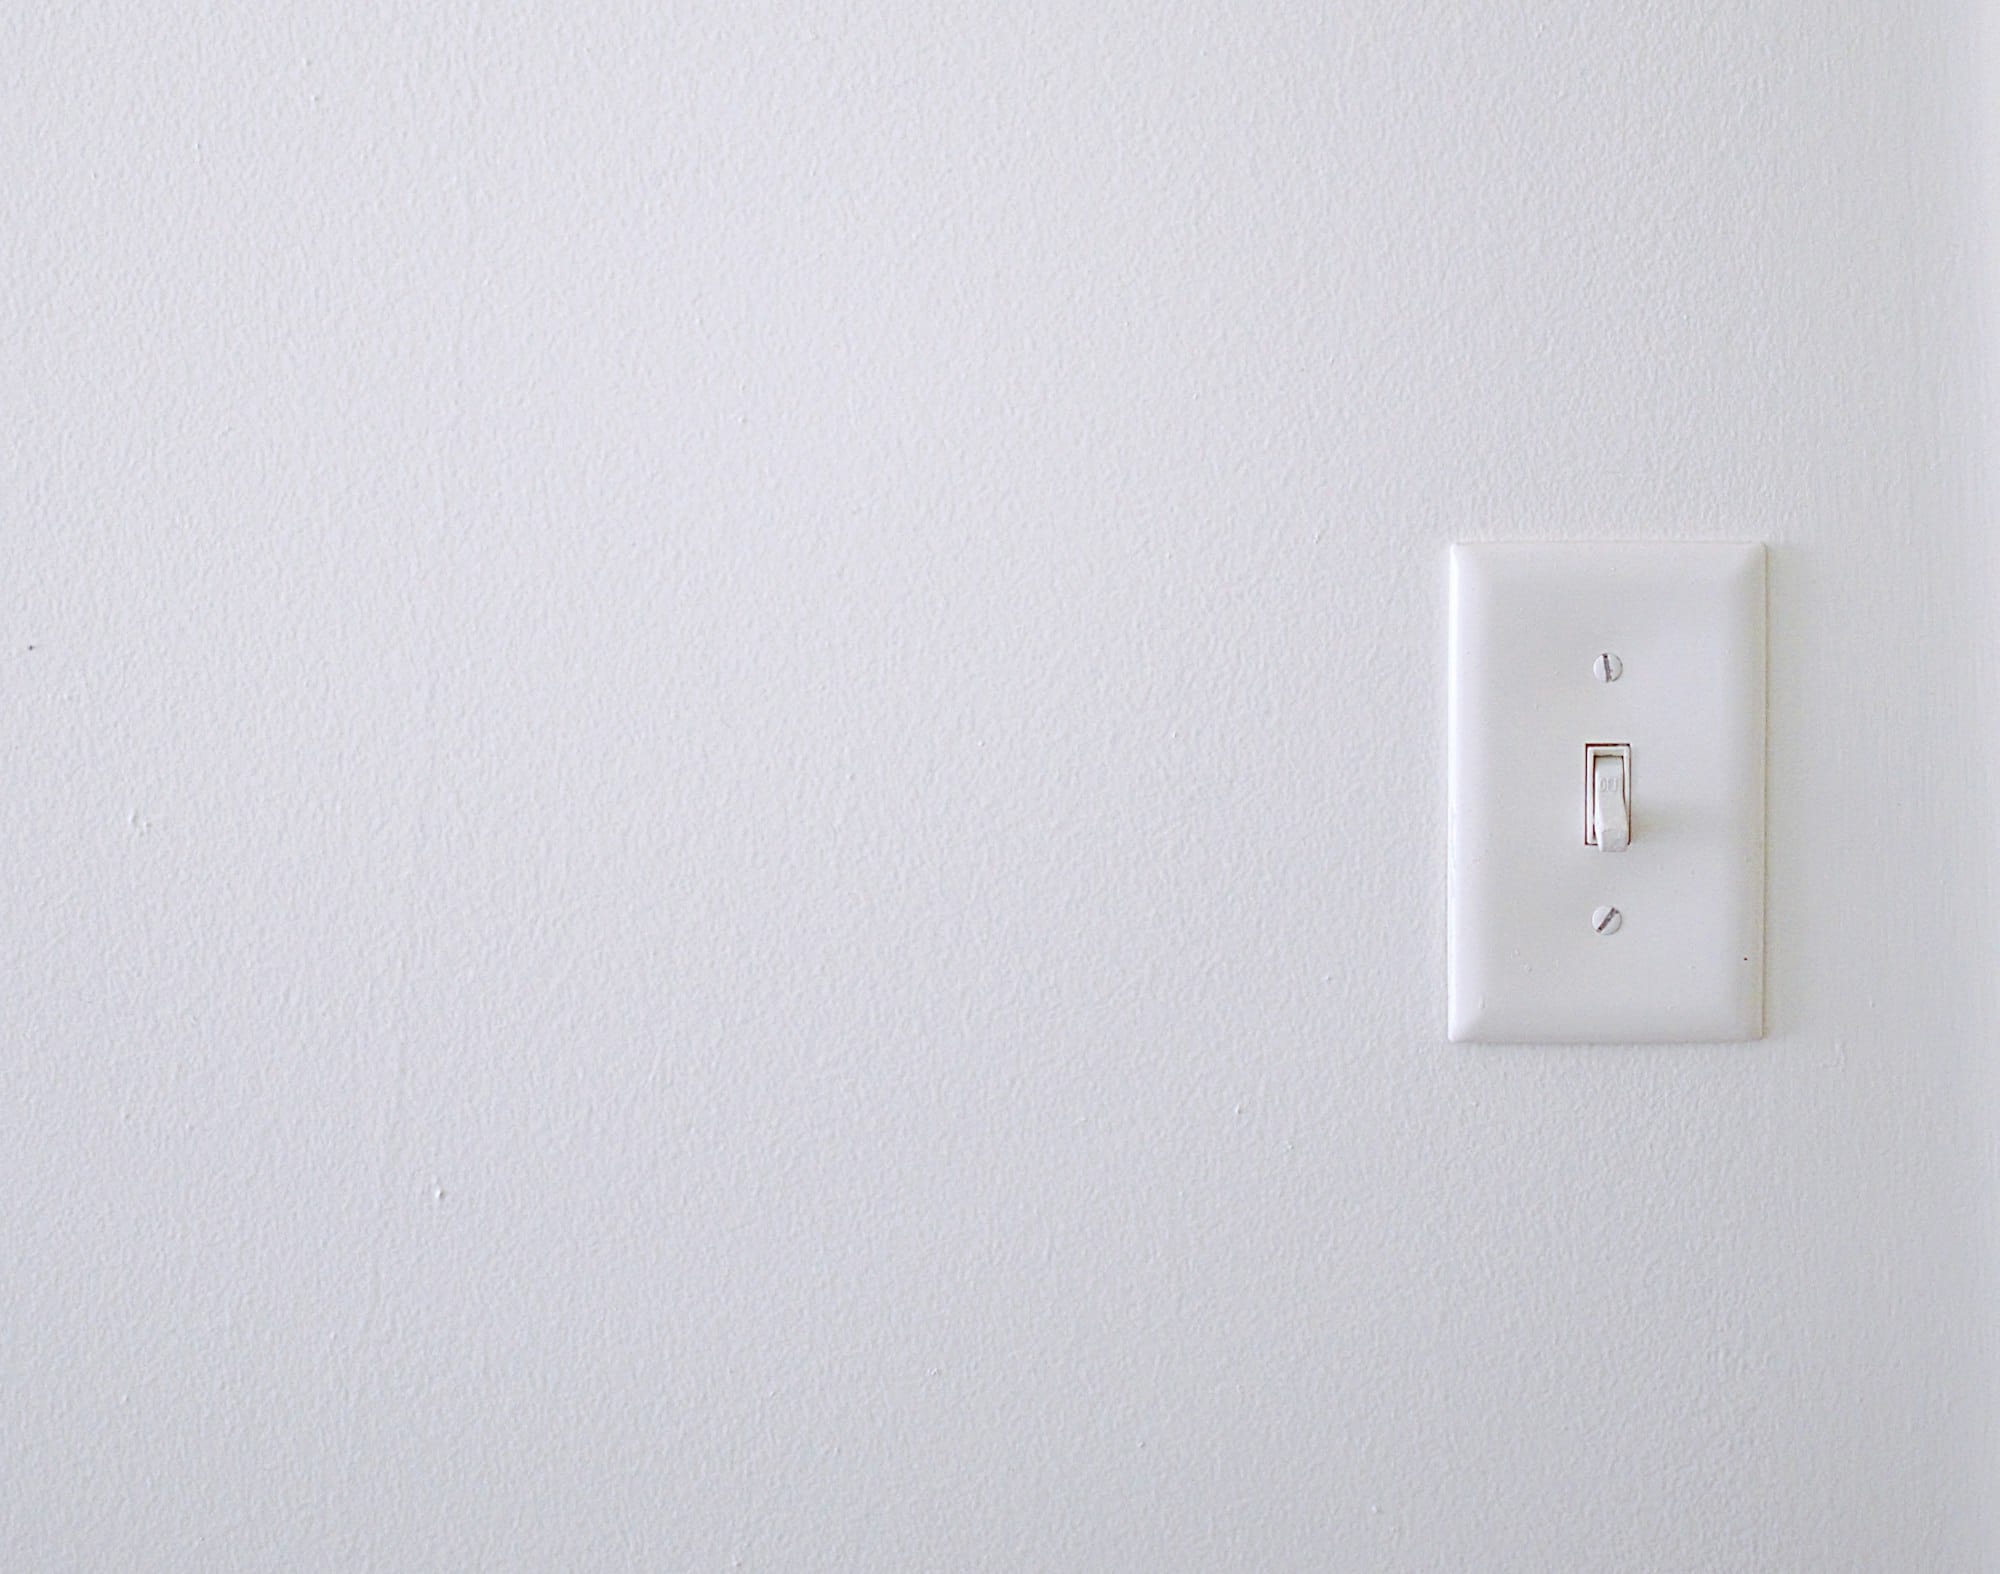 white wall switch